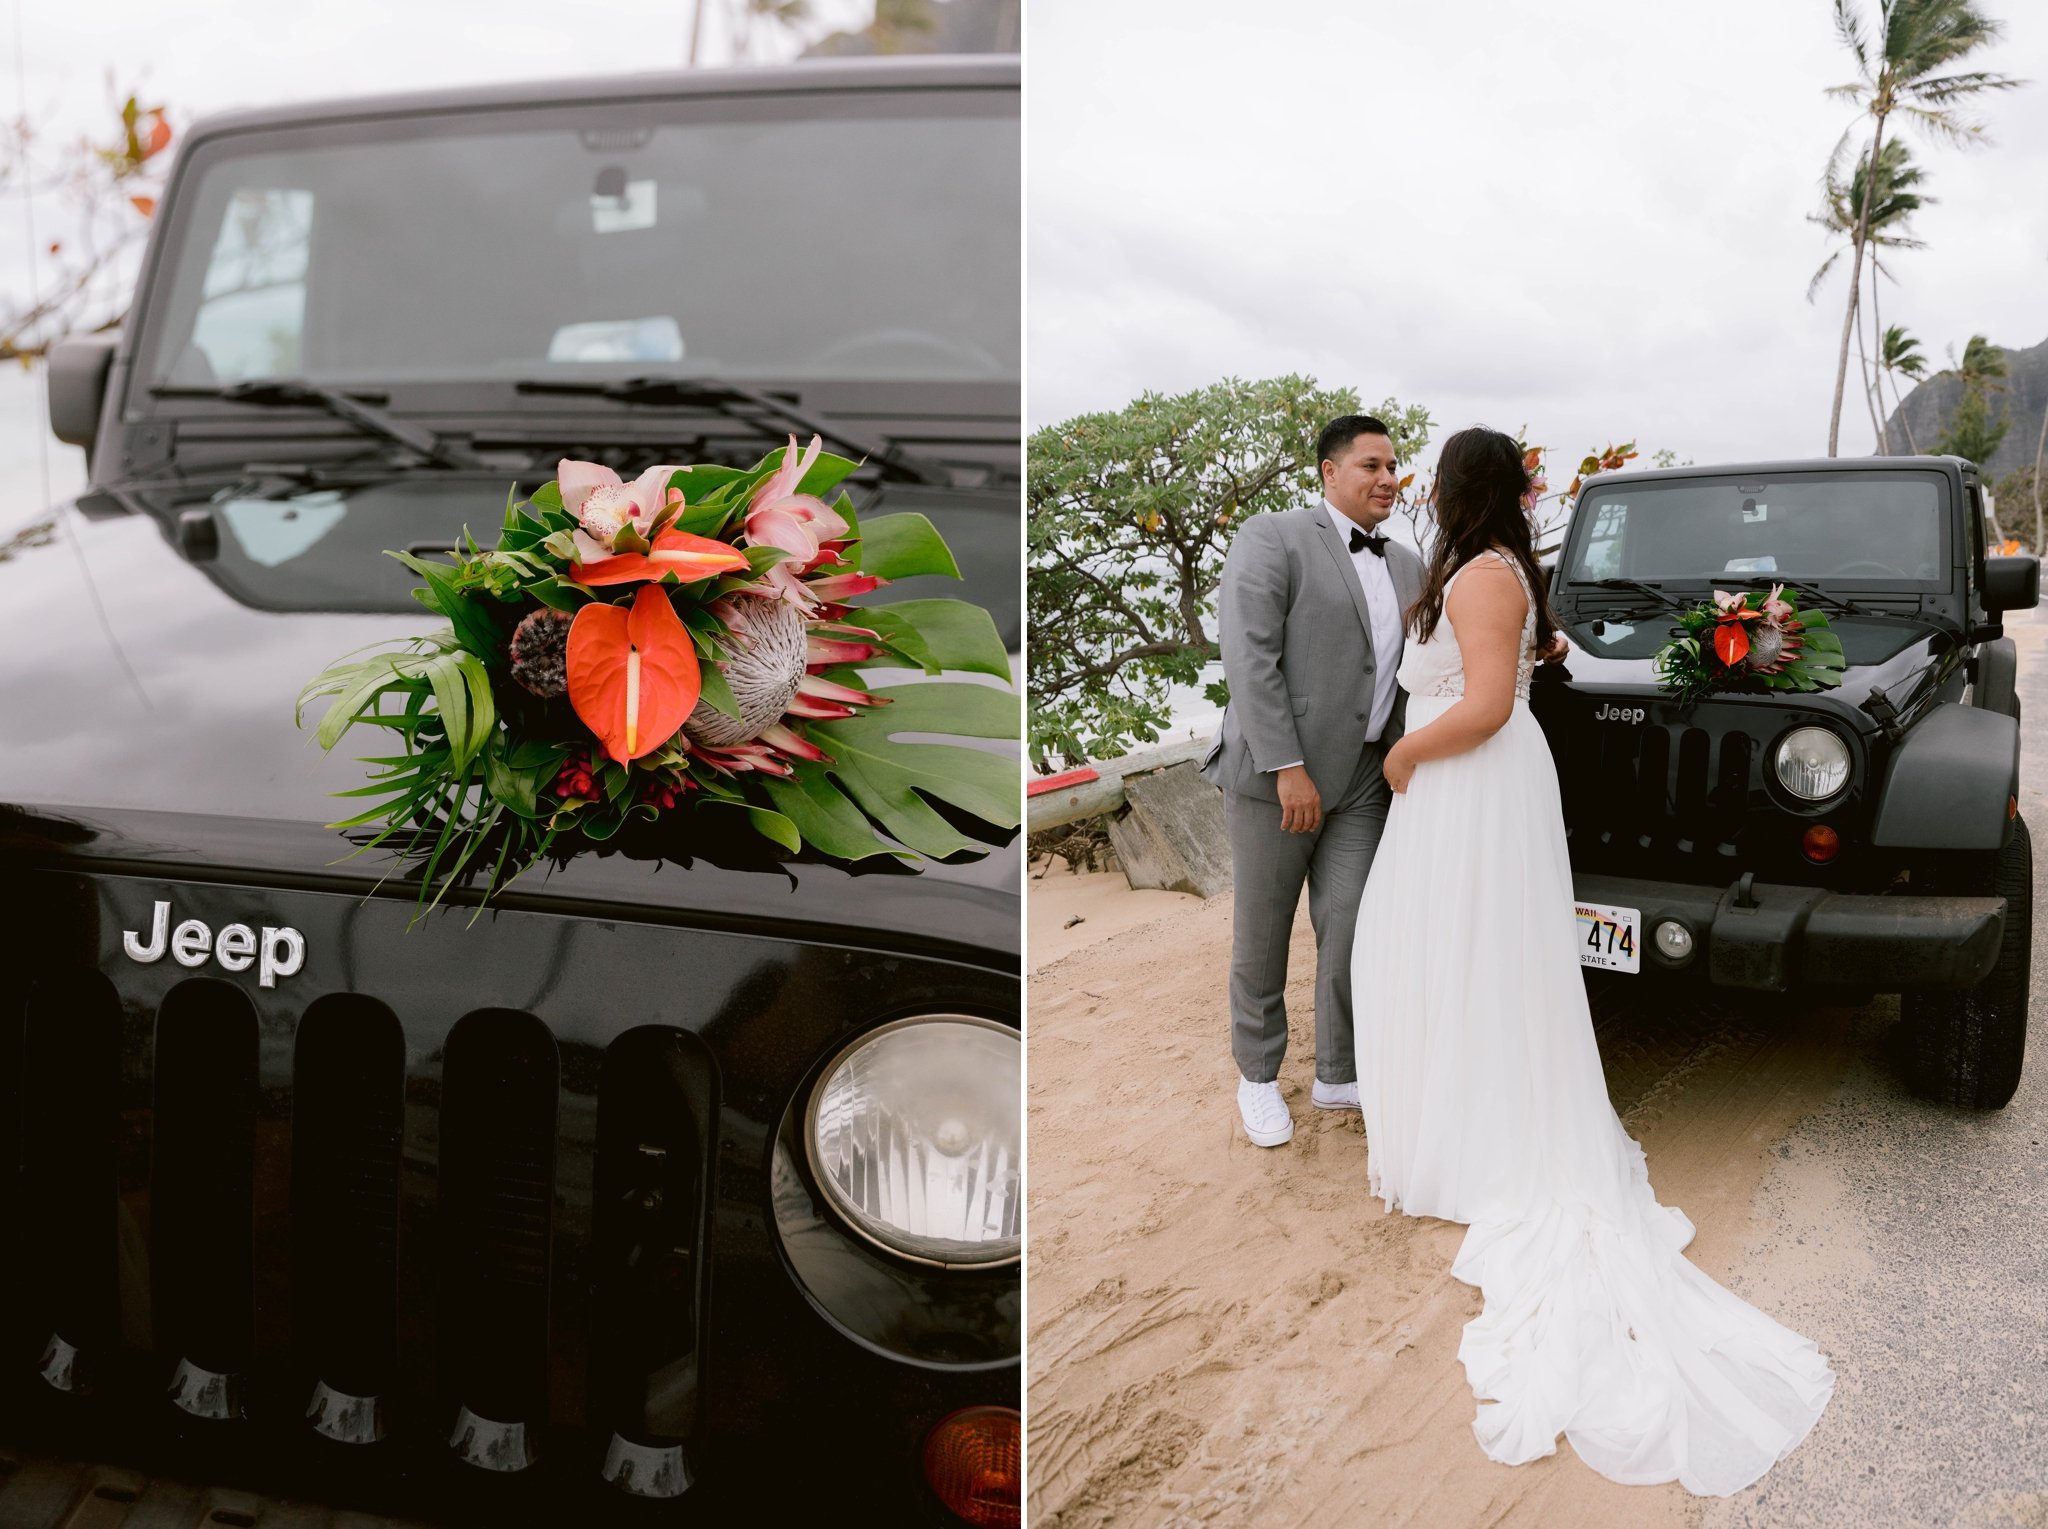 Jeep Adventure - Elopement at Kaaawa Beach - Oahu Hawaii Wedding Photographer 